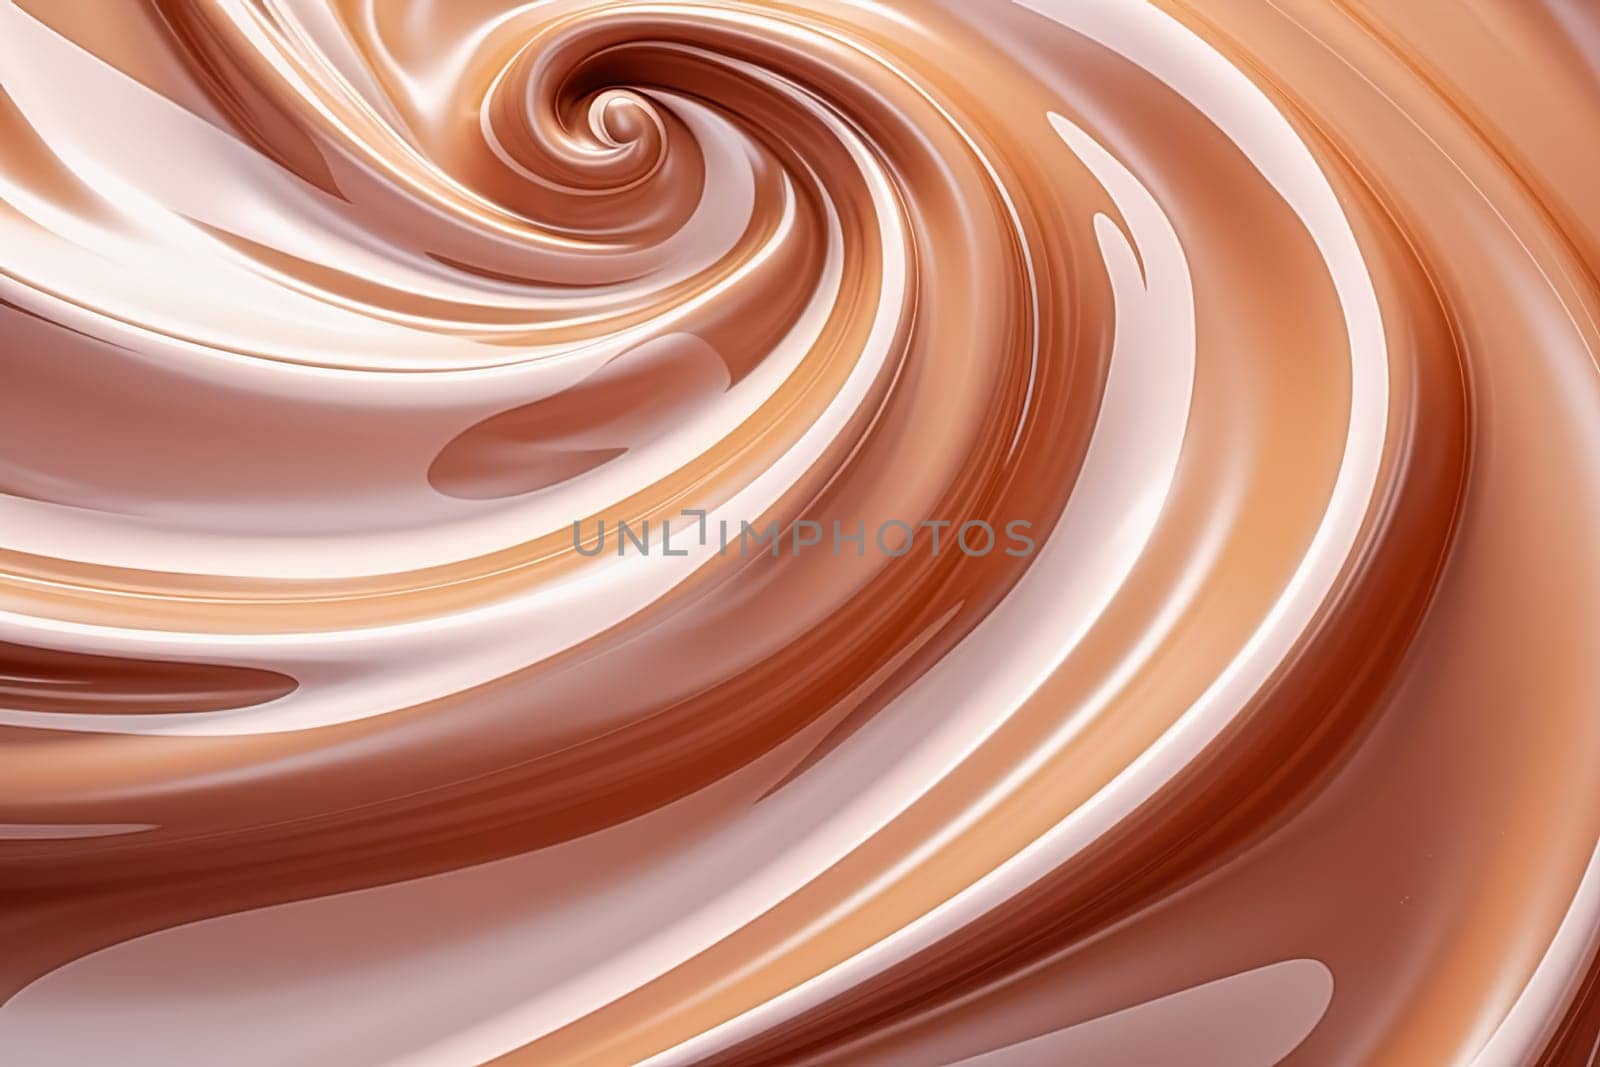 Hot chocolate swirl texture. Close-up.